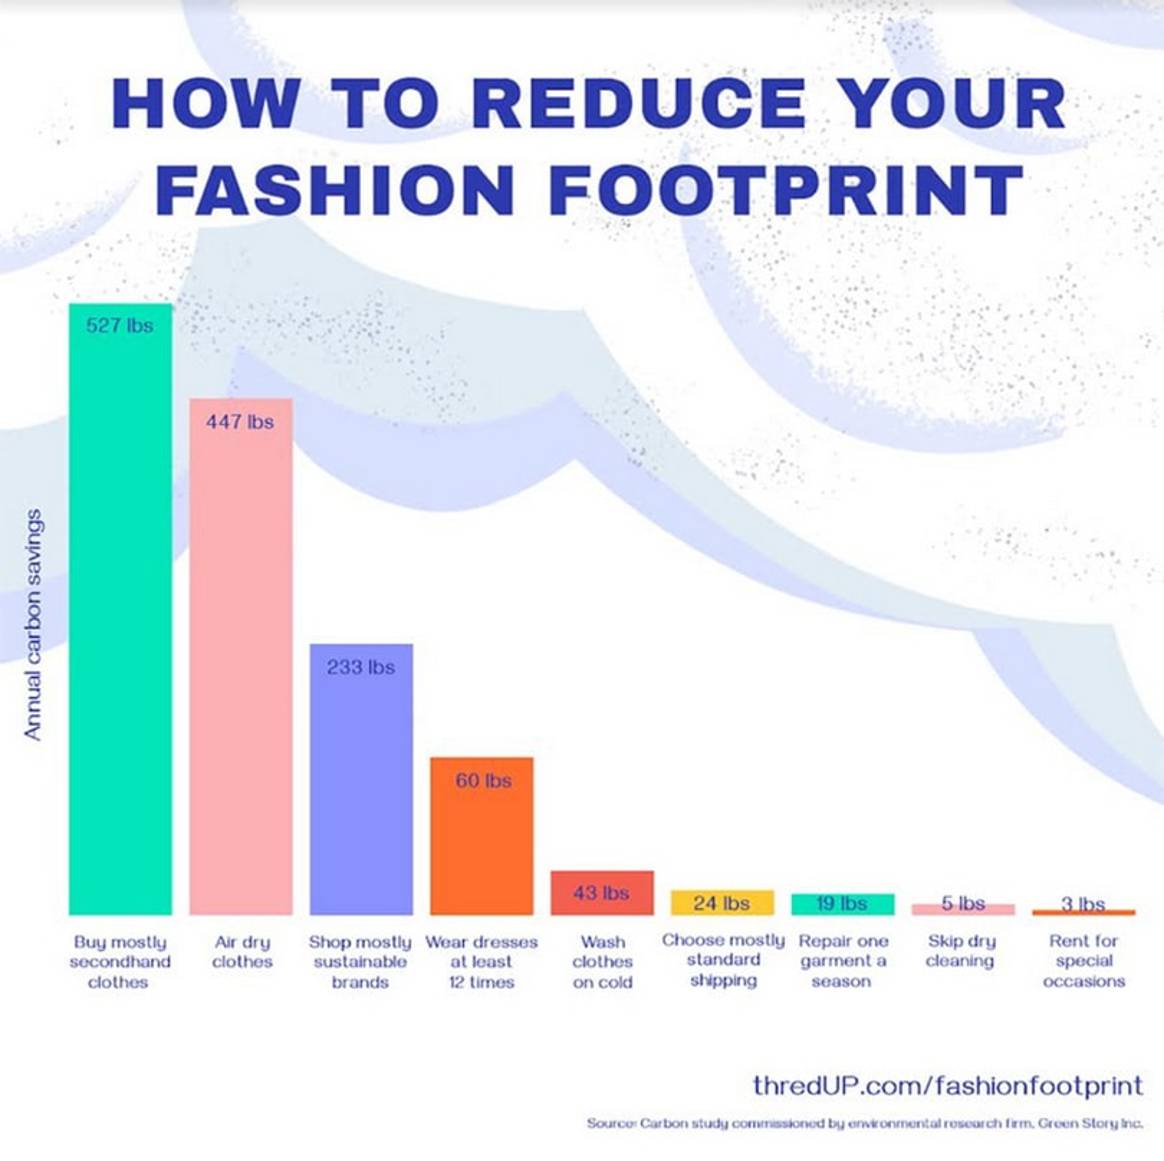 ThredUp launches Fashion Footprint Calculator to help consumers learn their environmental impact